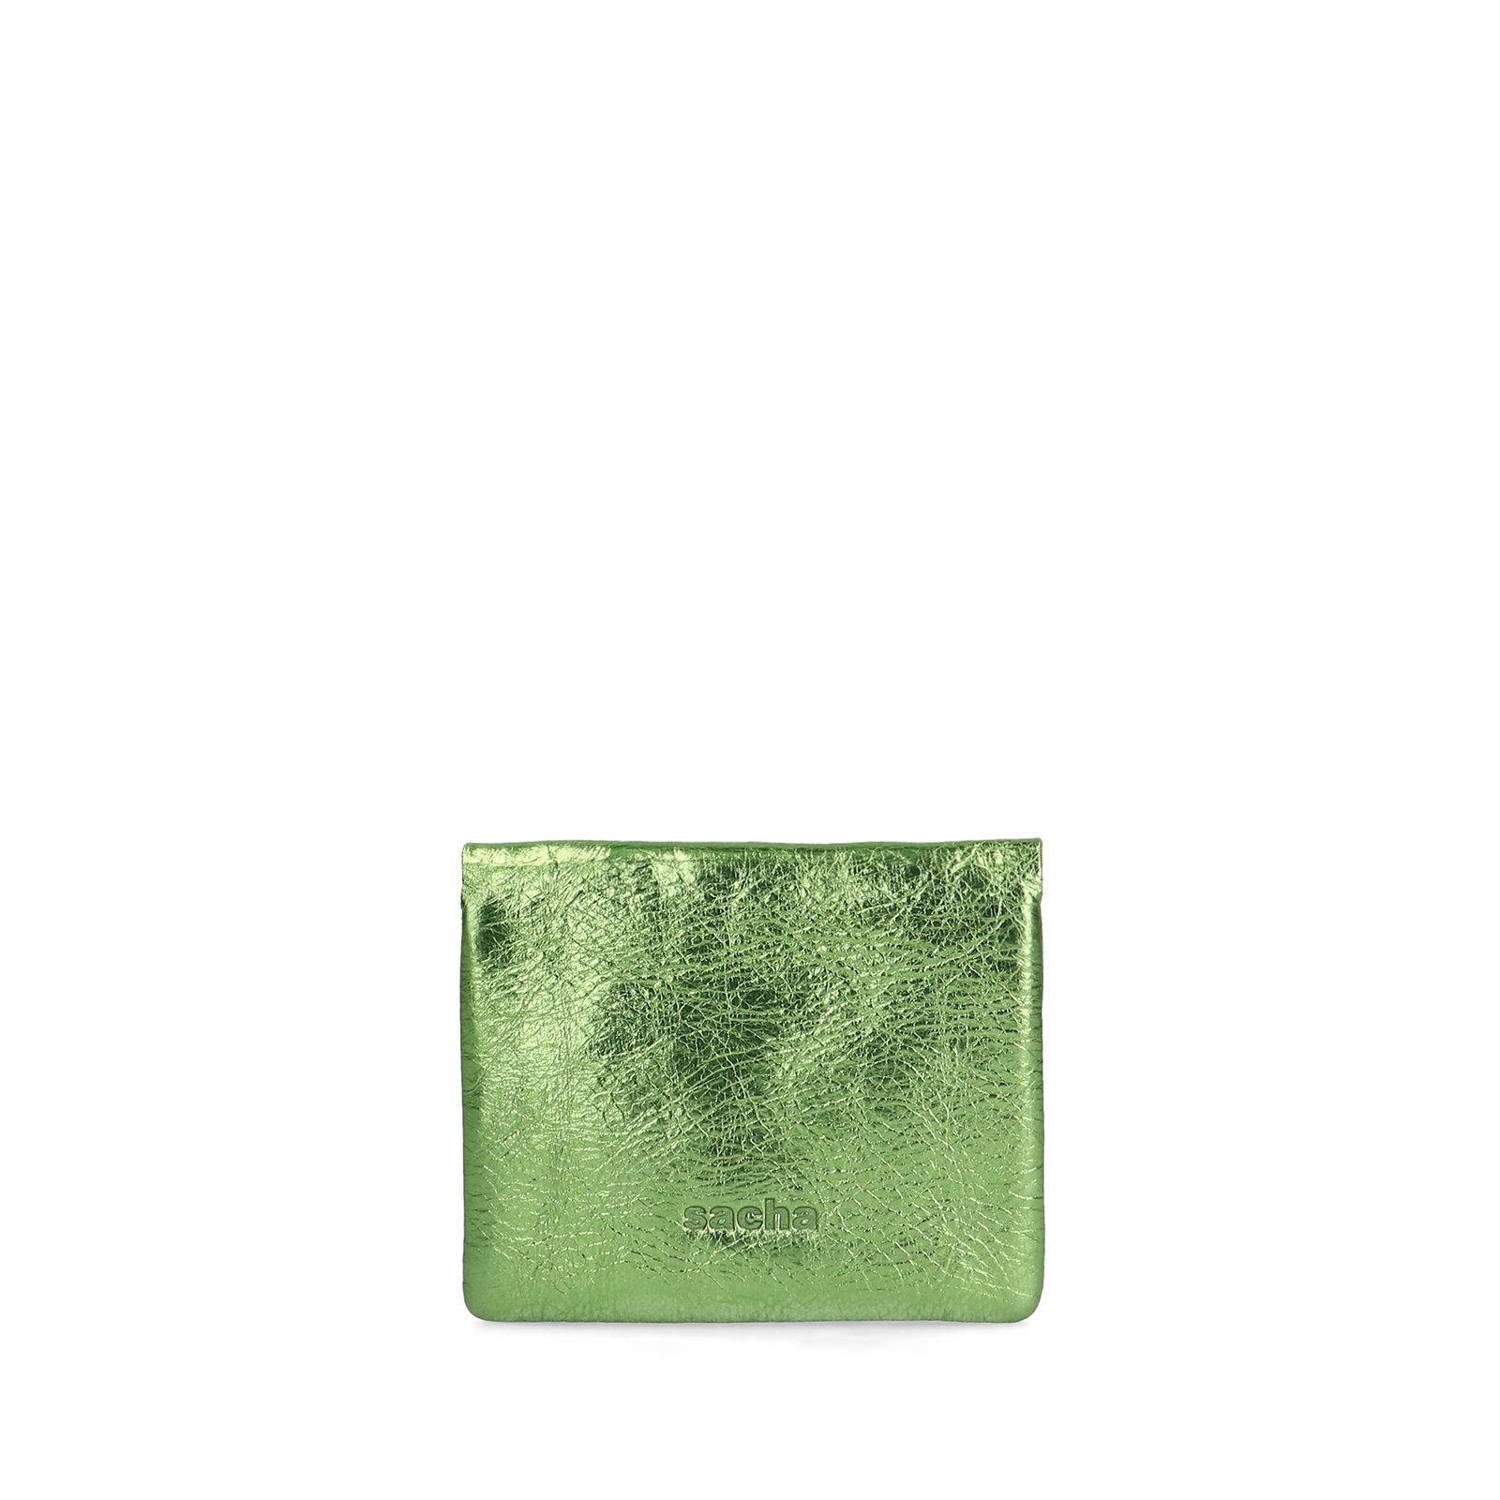 Sacha metallic portemonnee groen